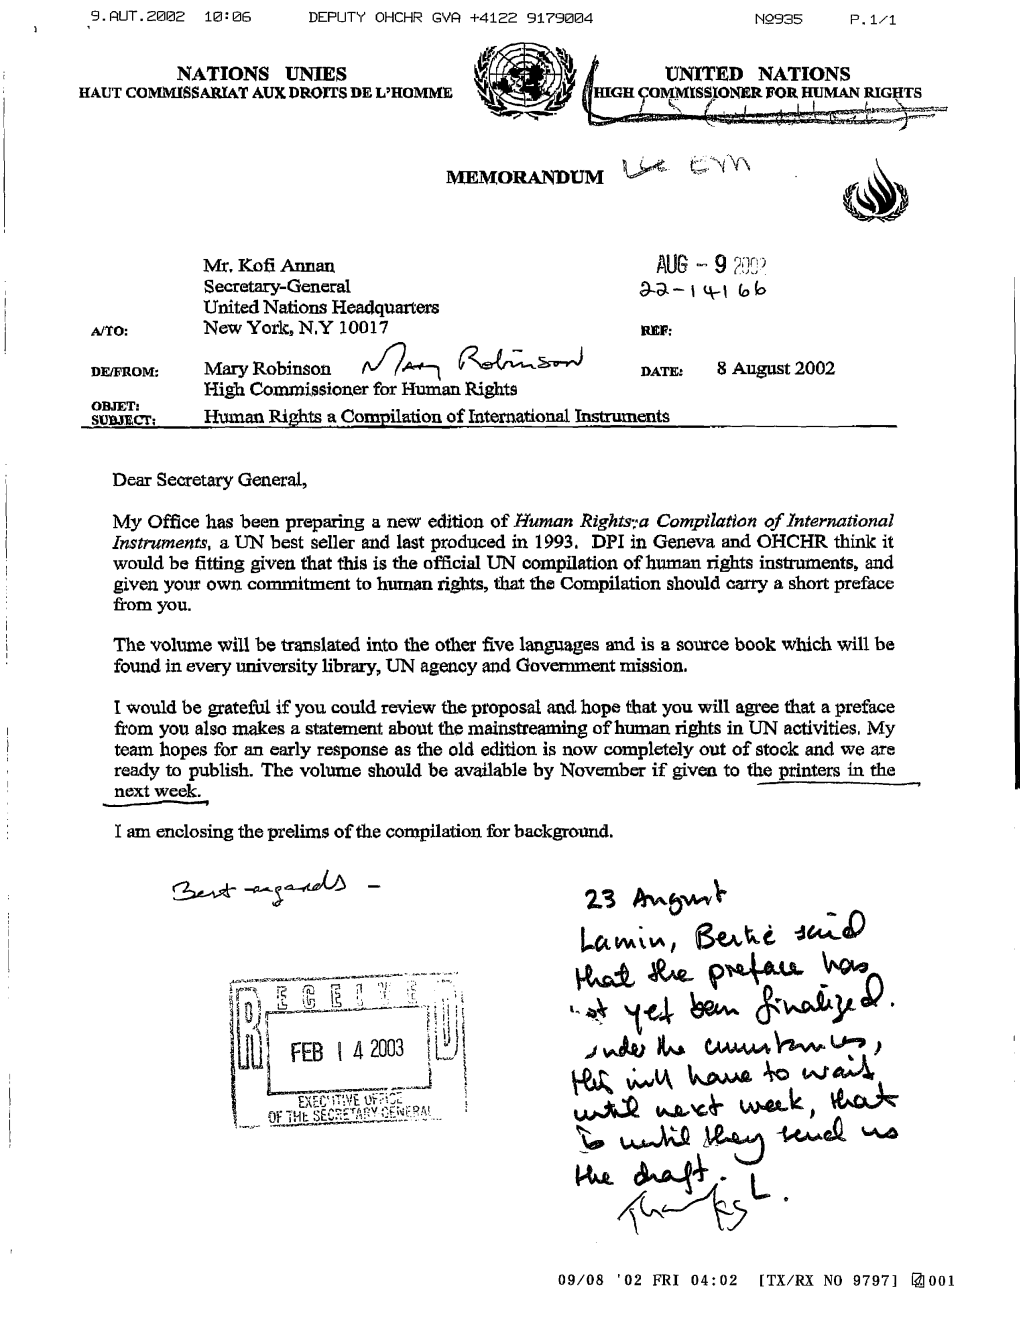 Alb » 9 200? Secretary-General United Nations Headquarters A/TO: New York, N.Y 10017 REP